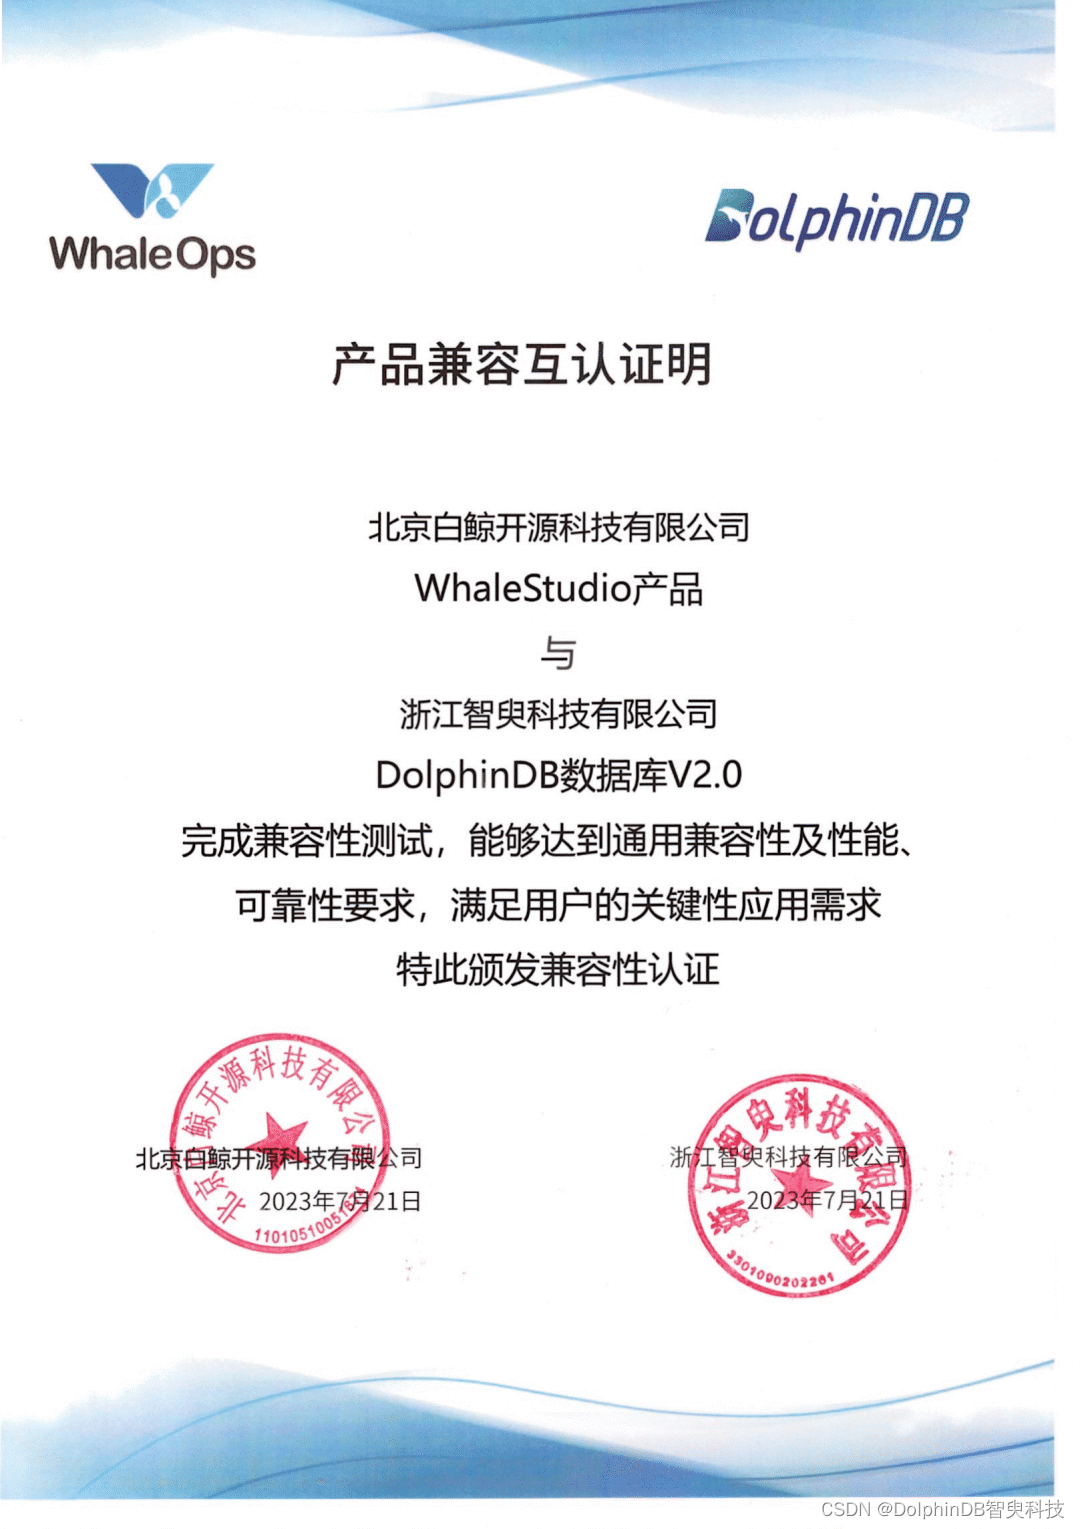 DolphinDB 携手白鲸开源 WhaleStudio 打造高效敏捷的 DataOps 解决方案